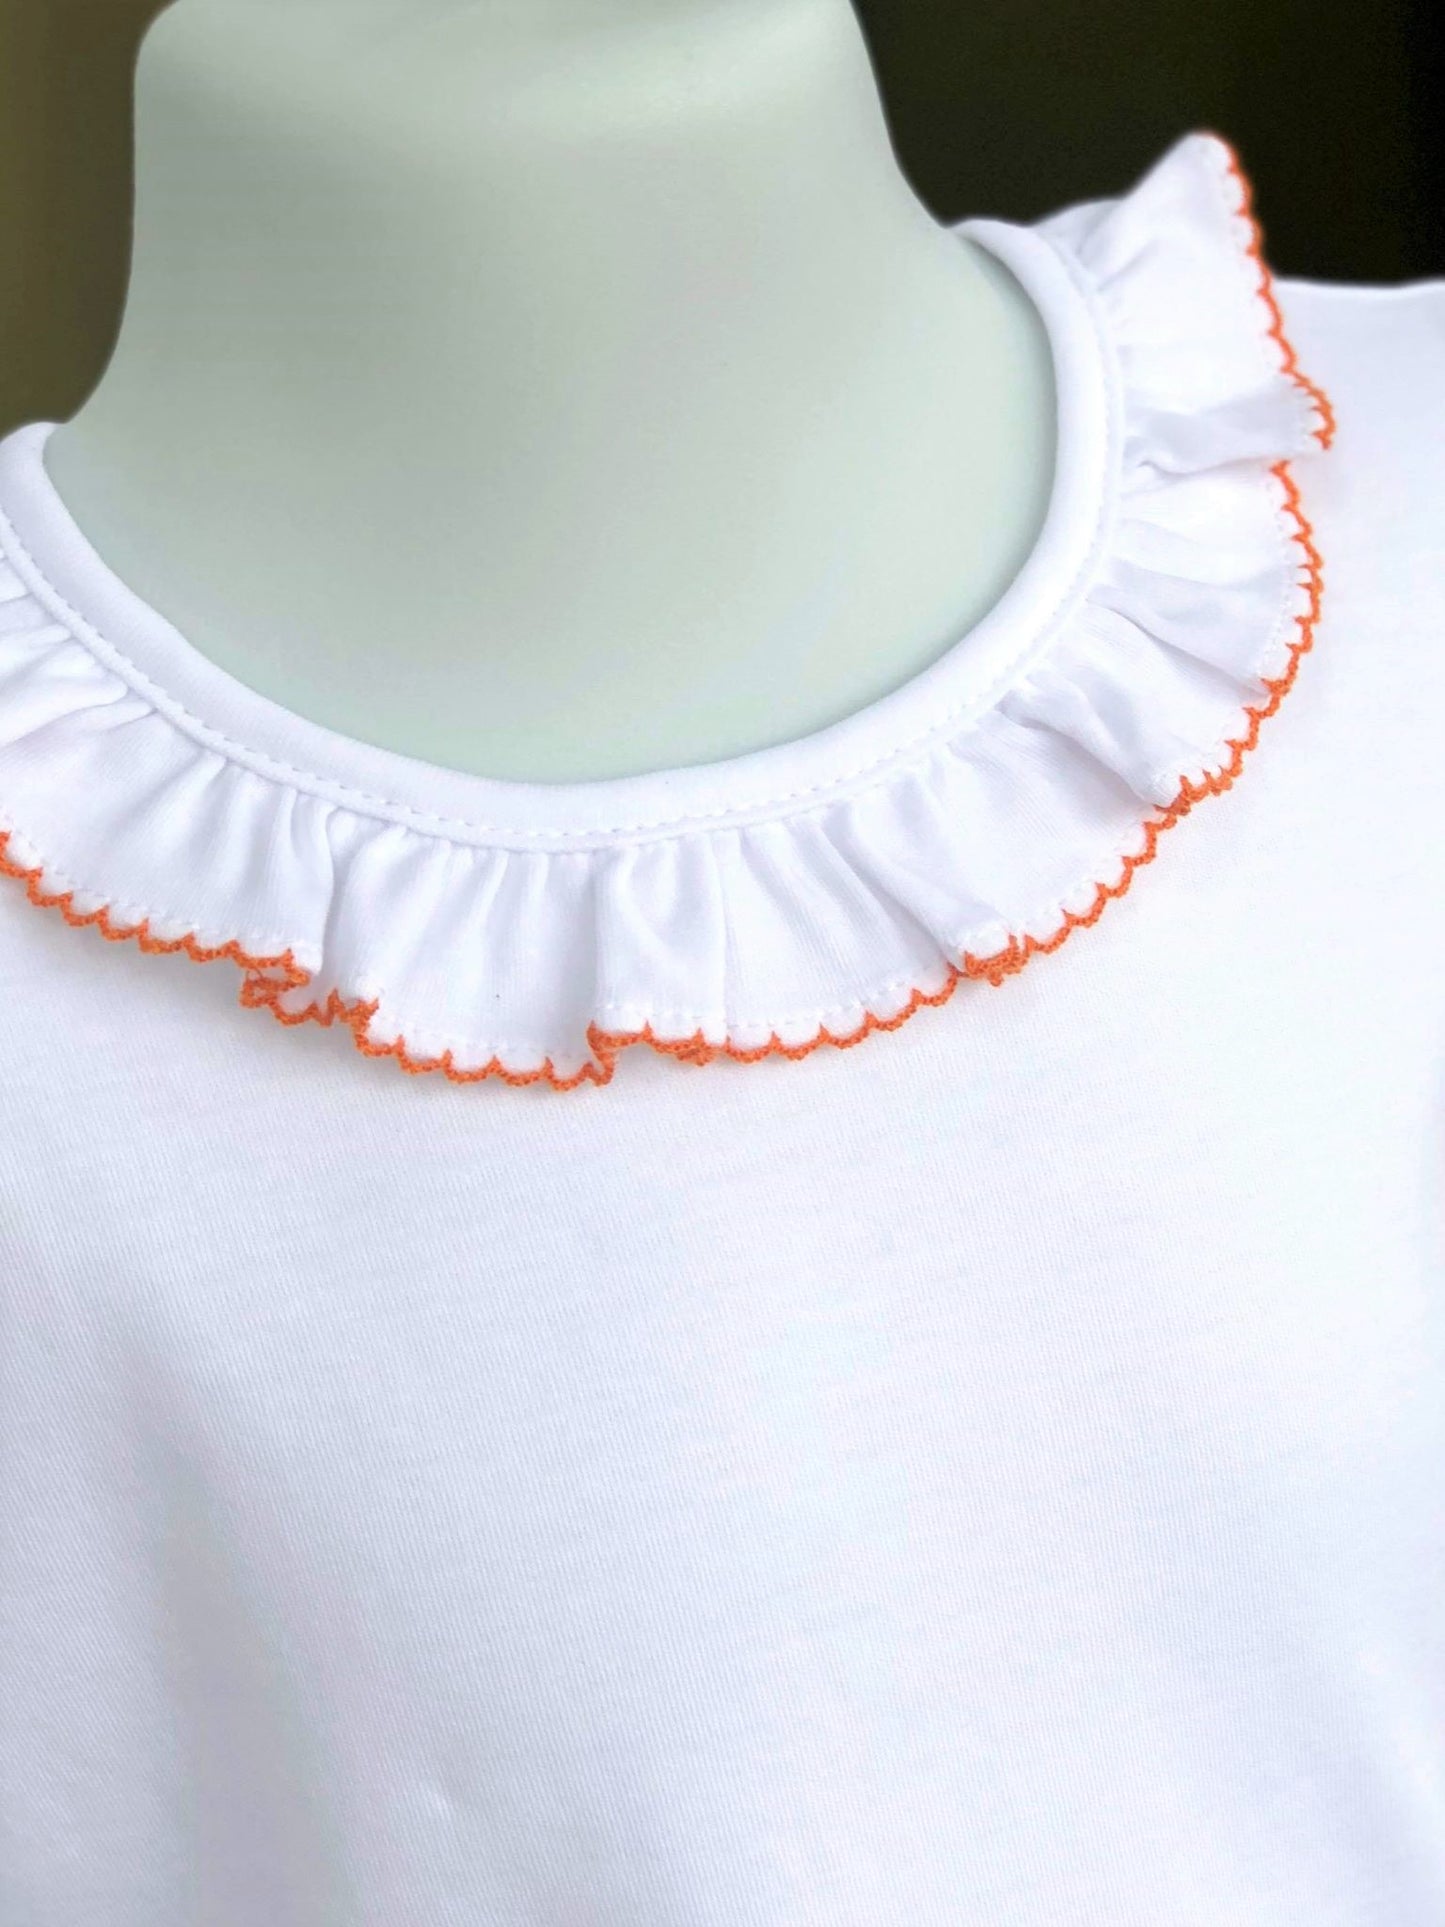 Ruffle collar blouse with orange picot trim*